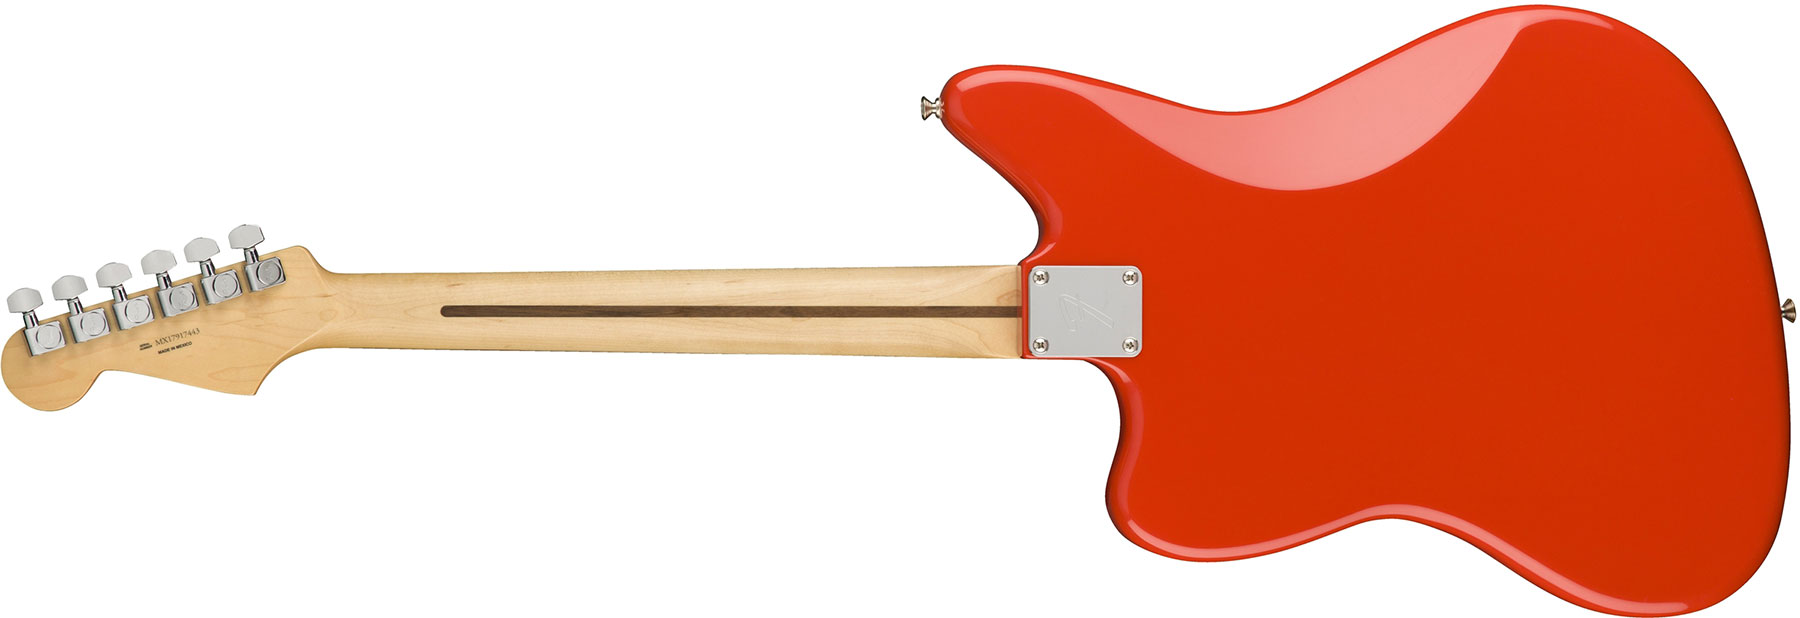 Fender Jaguar Player Mex Hs Pf - Sonic Red - Retro-Rock-E-Gitarre - Variation 1